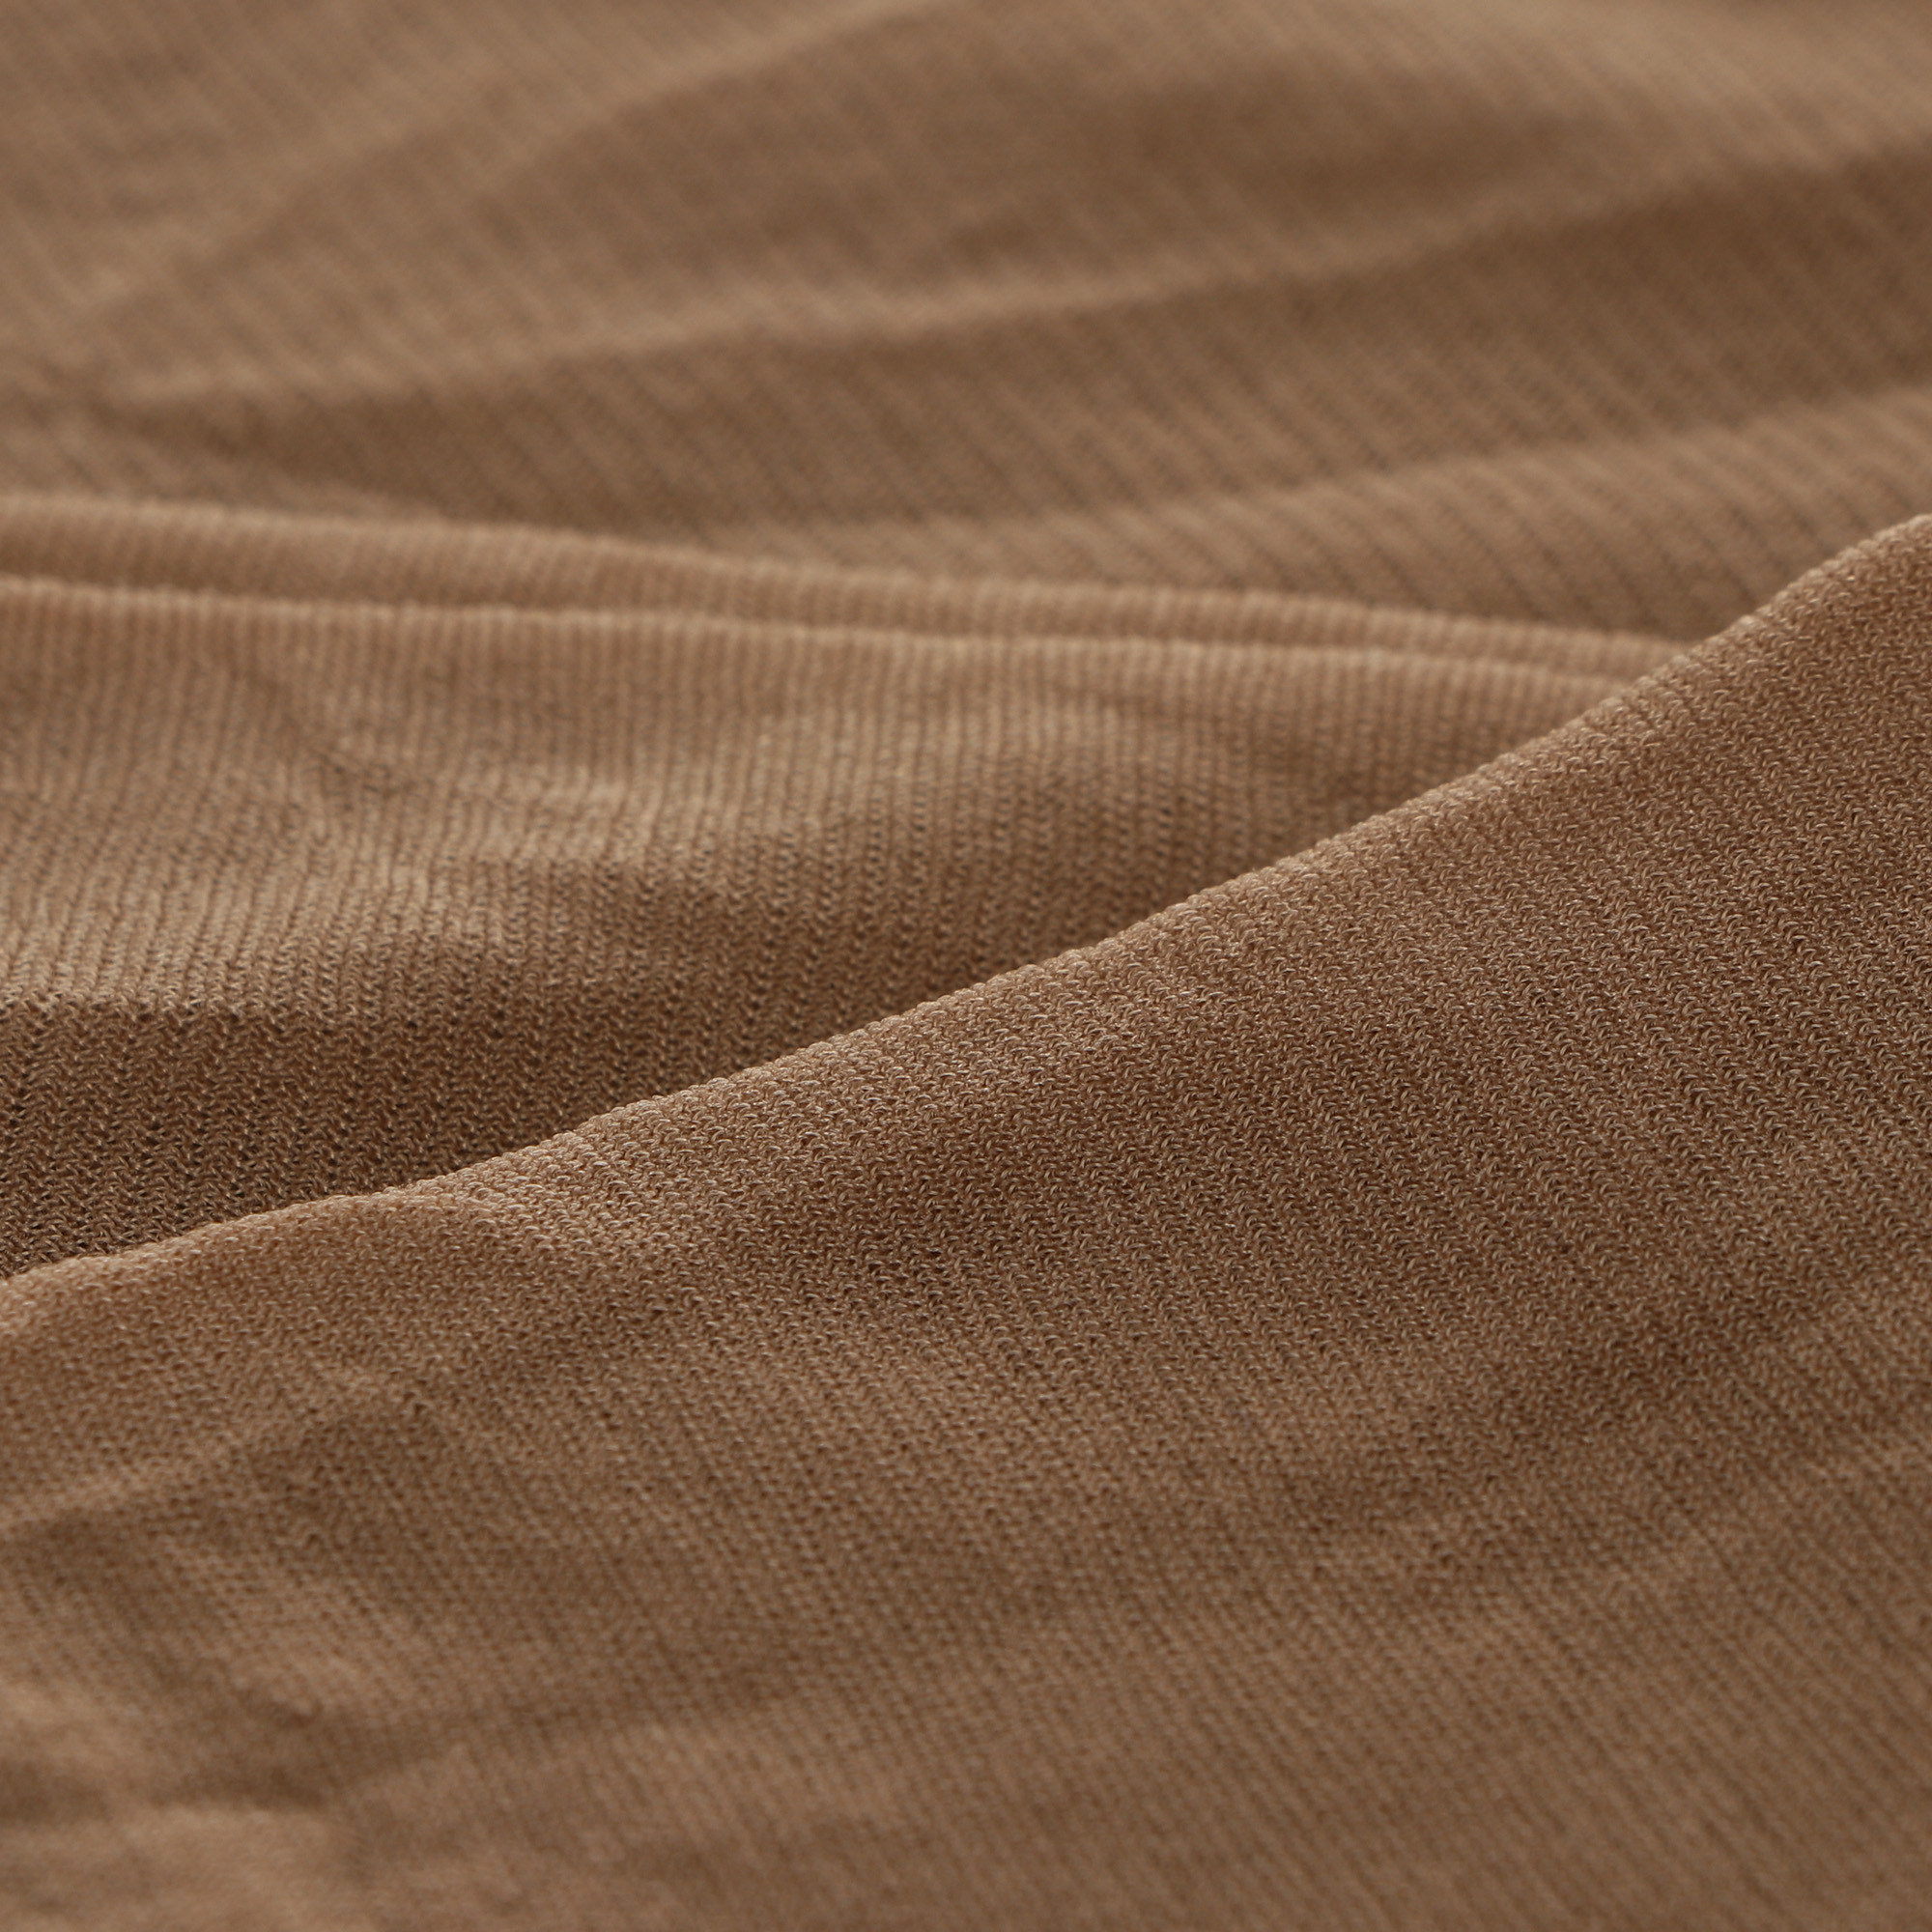 Колготки Sanpellegrino Doppio Filo 22 Avana XL, цвет коричневый, размер 4 - фото 2